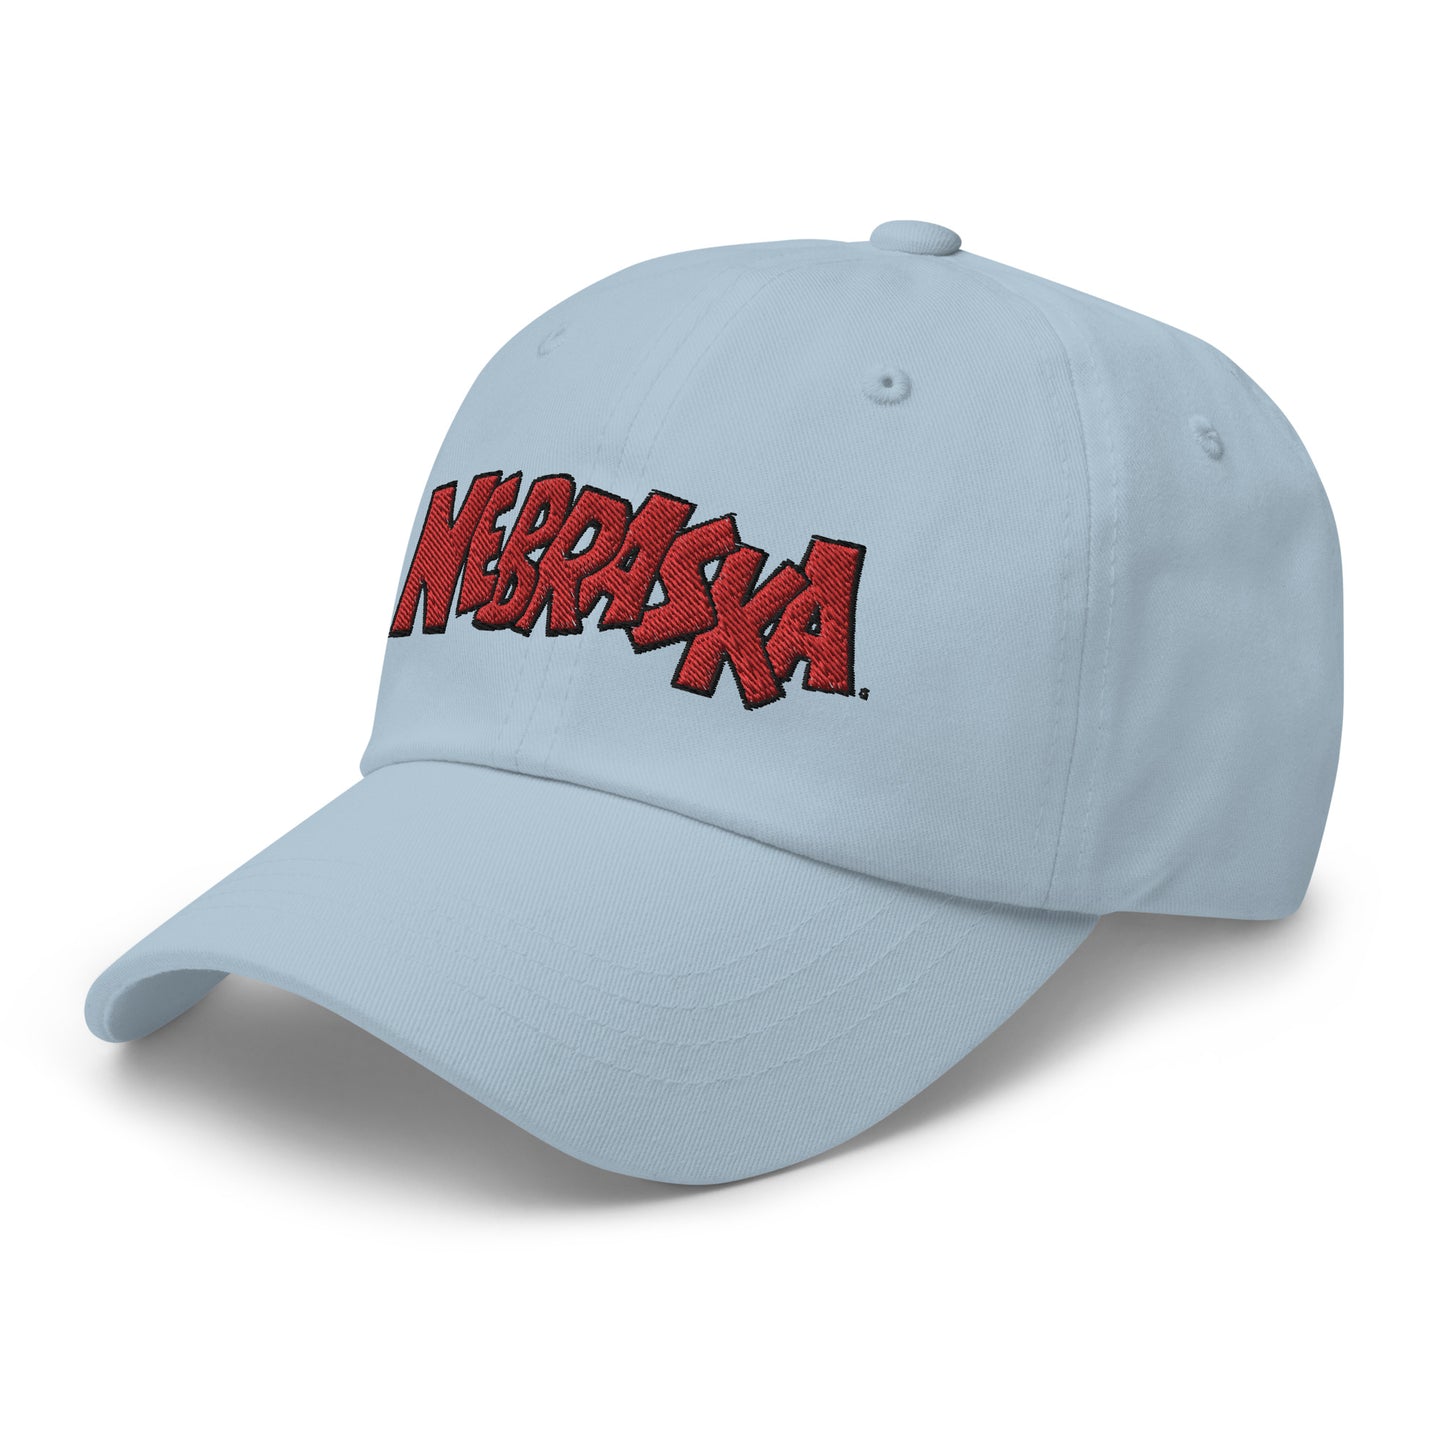 Nebraska Dad Hat